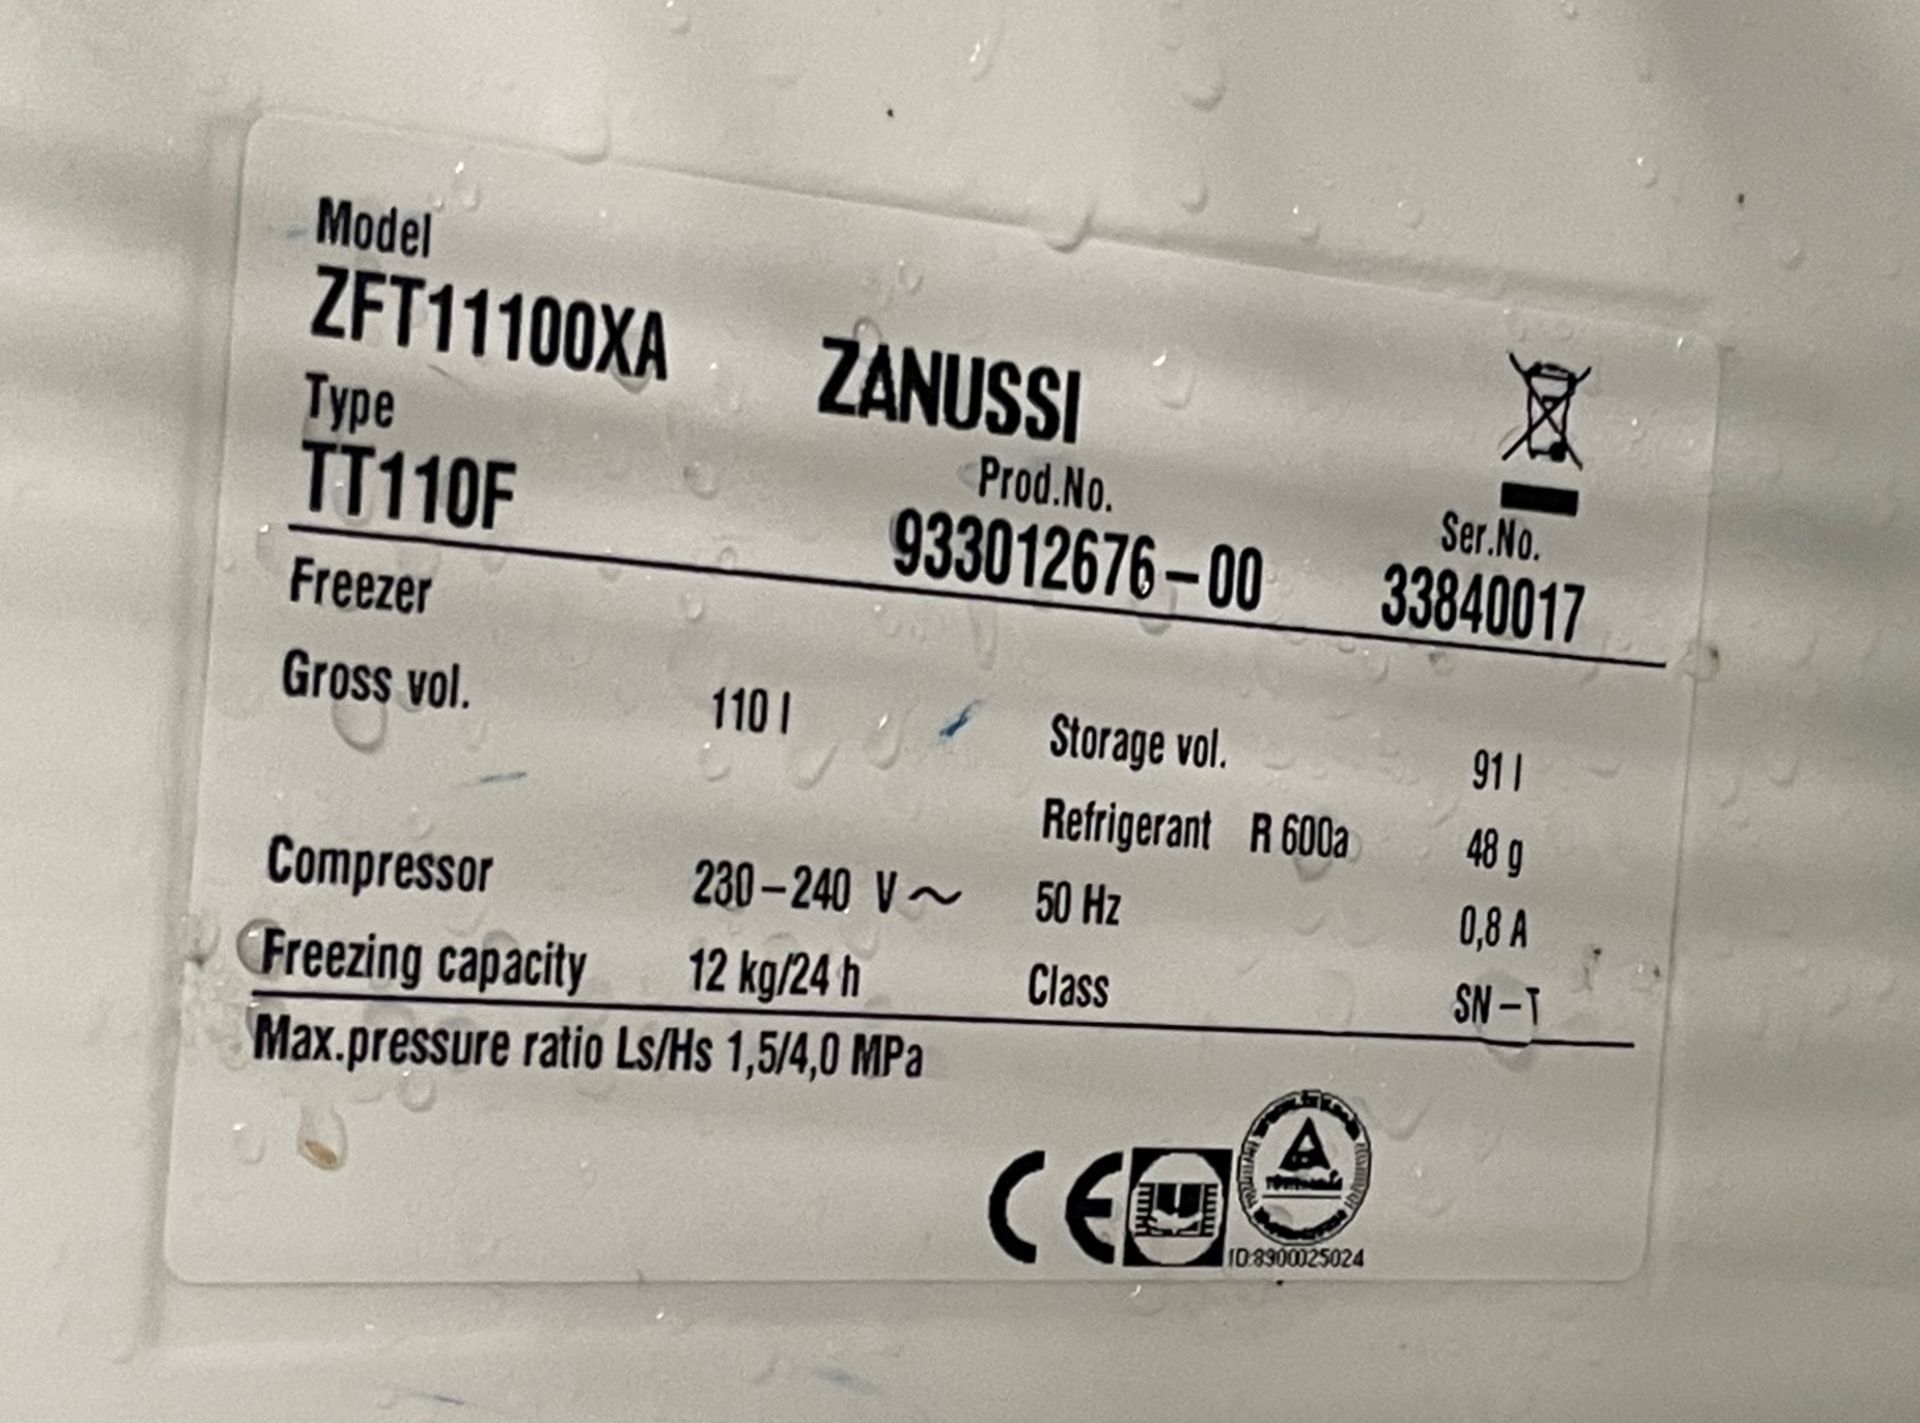 1 x Zanussi Undercounter Freezer With Silver Finish - Image 3 of 3